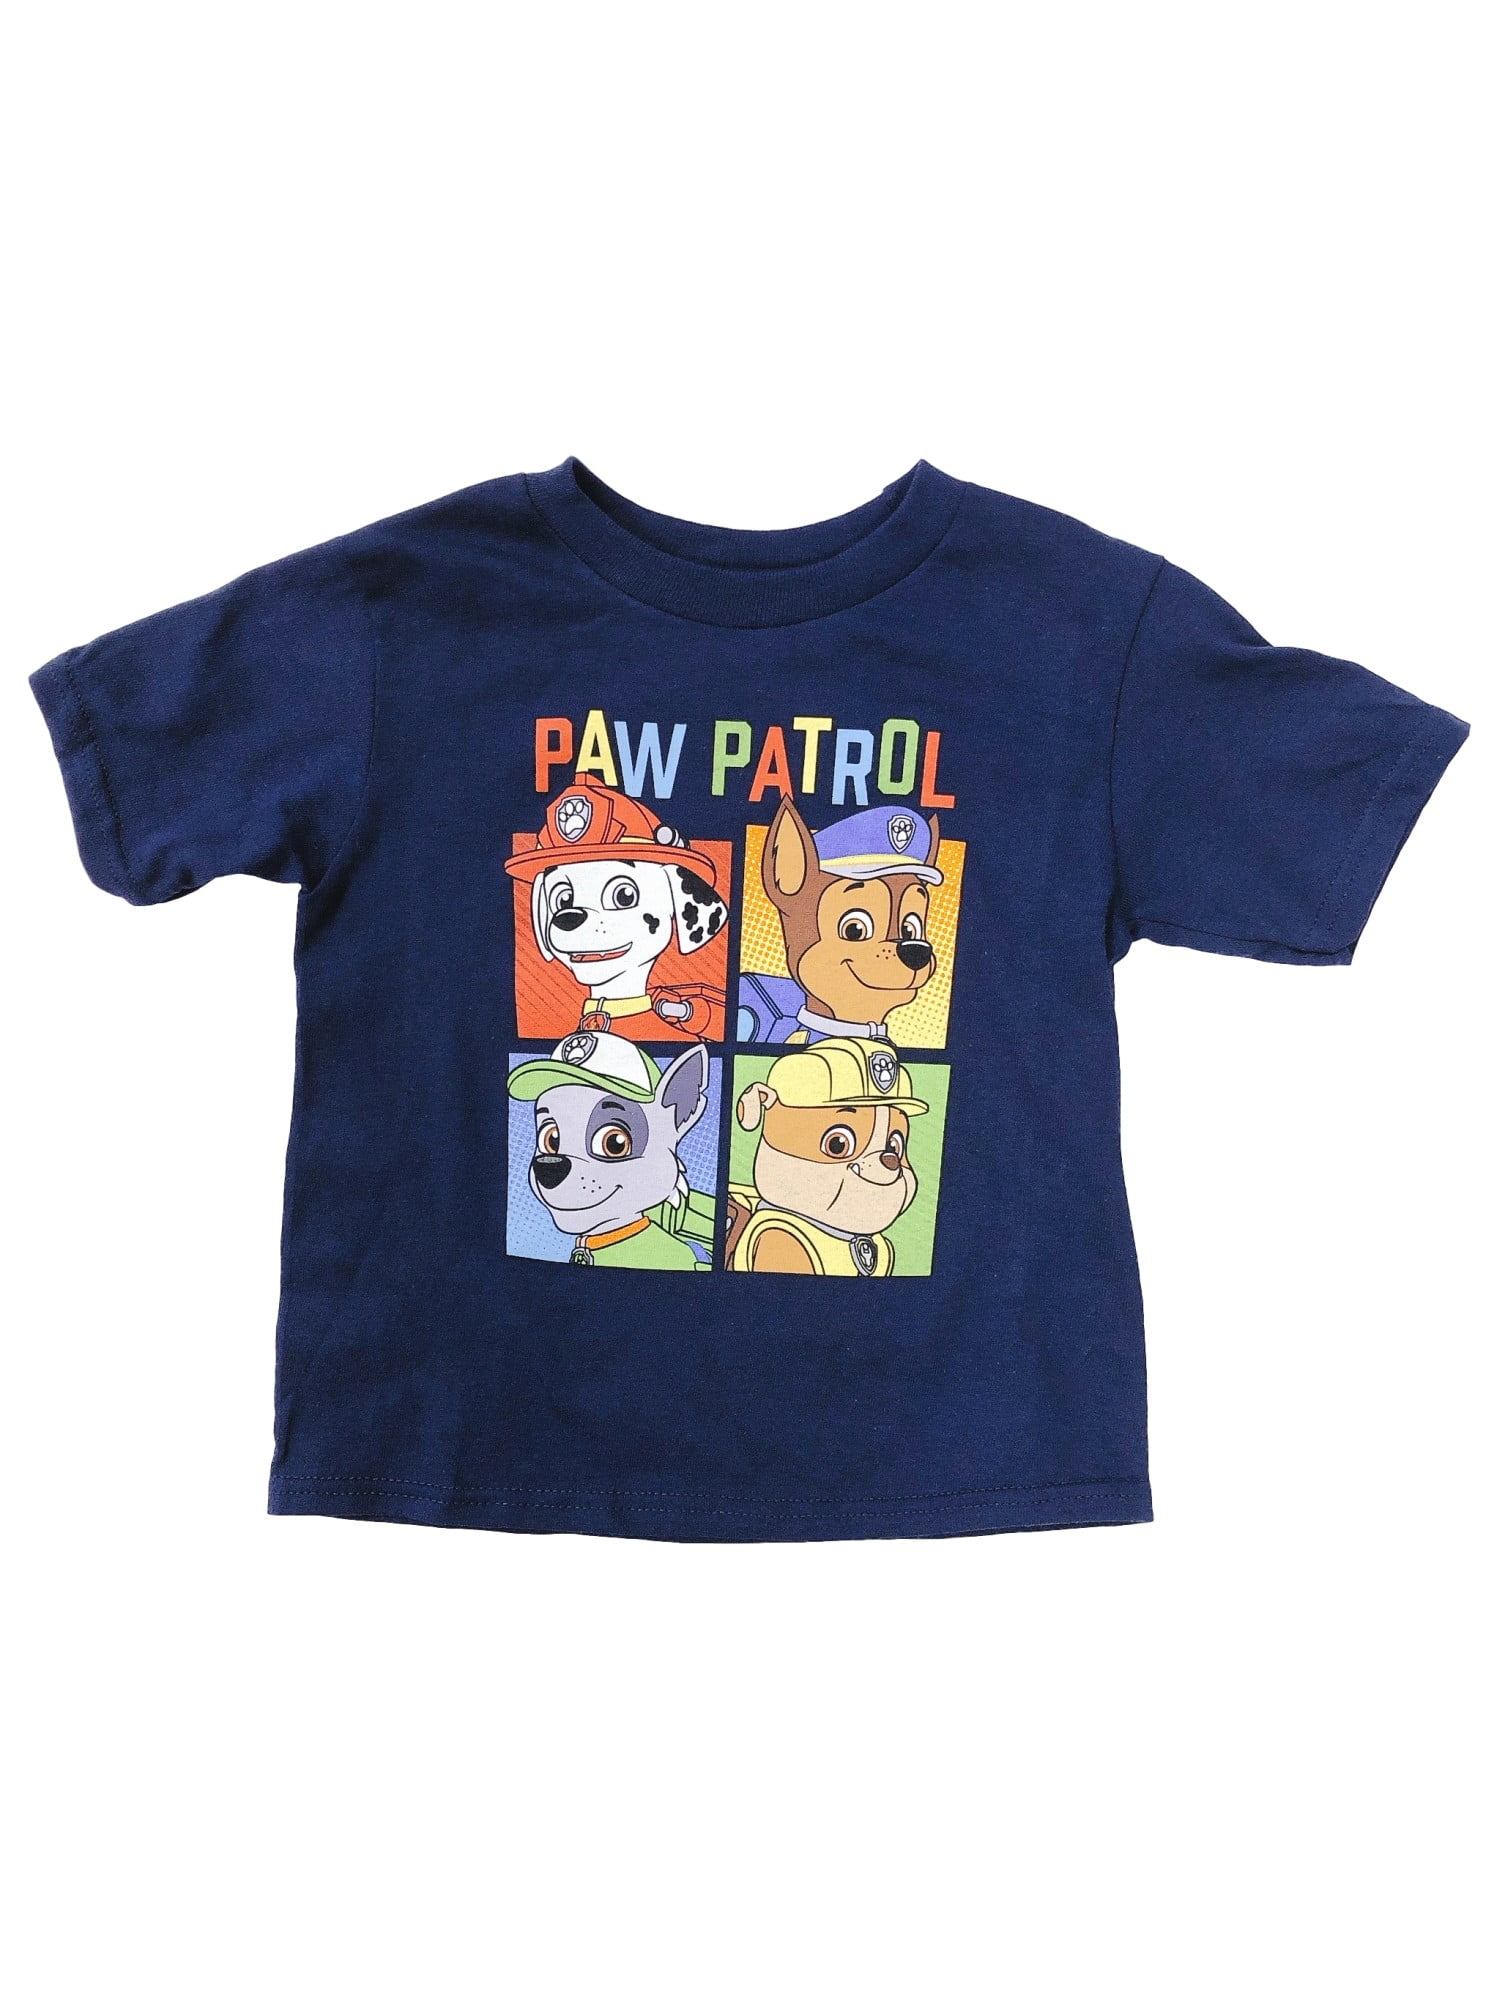 Paw Patrol Toddler Boys Short Sleeve T Shirt  NWT Orange or Blue Size  2T 